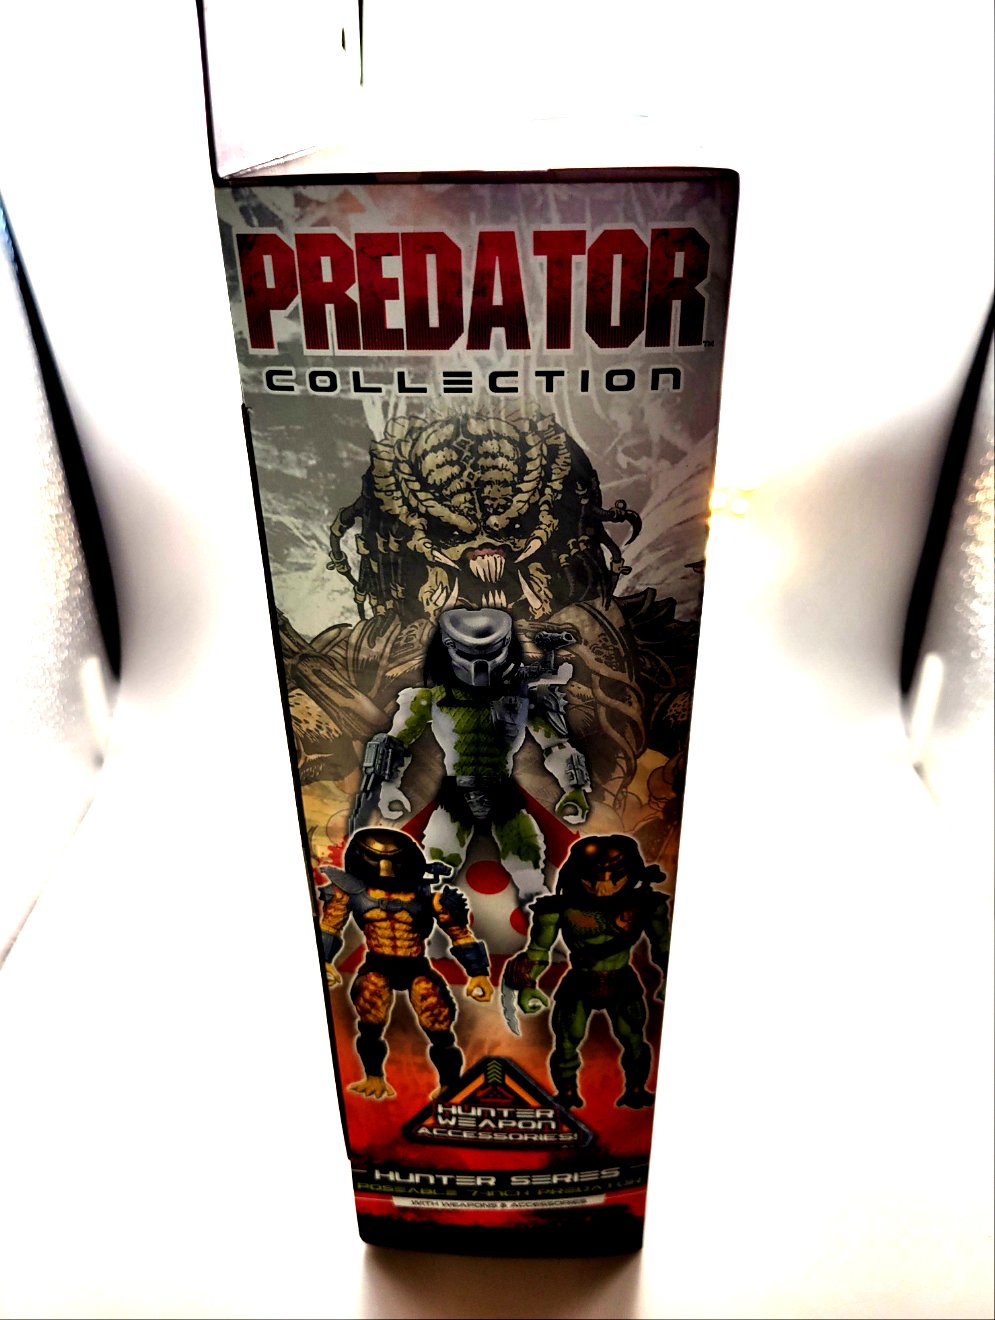 Lanard Toys Predator Collection Hunter Series City Hunter Predator Action Figure